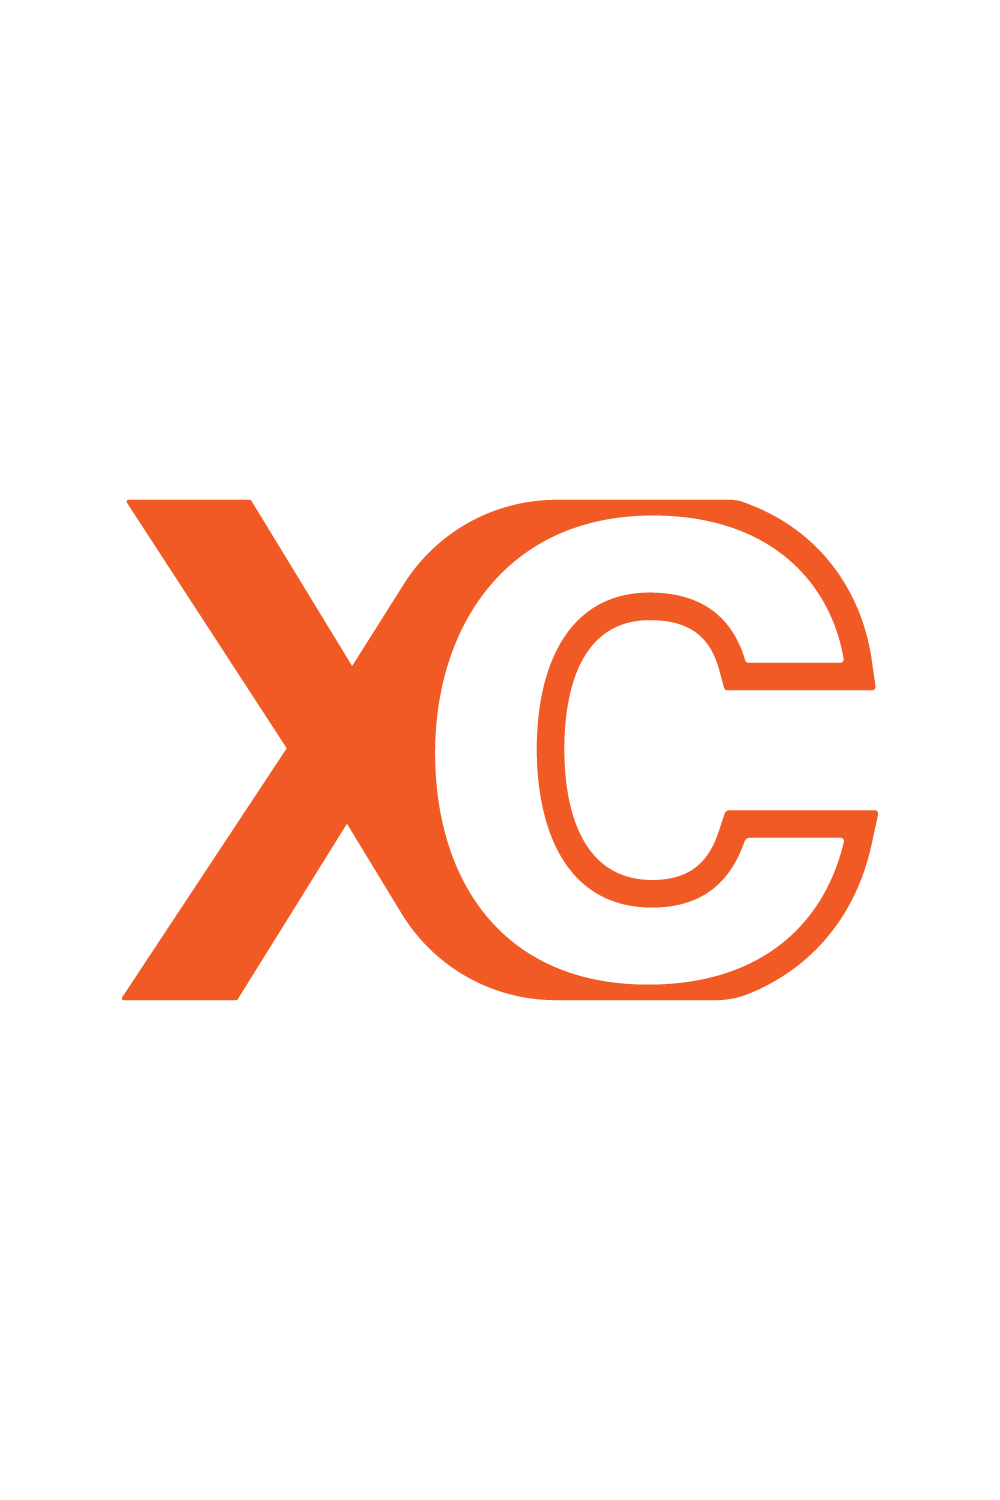 Initials XC logo design vector template arts XC letters logo design CX logo best company identity orange color logo pinterest preview image.